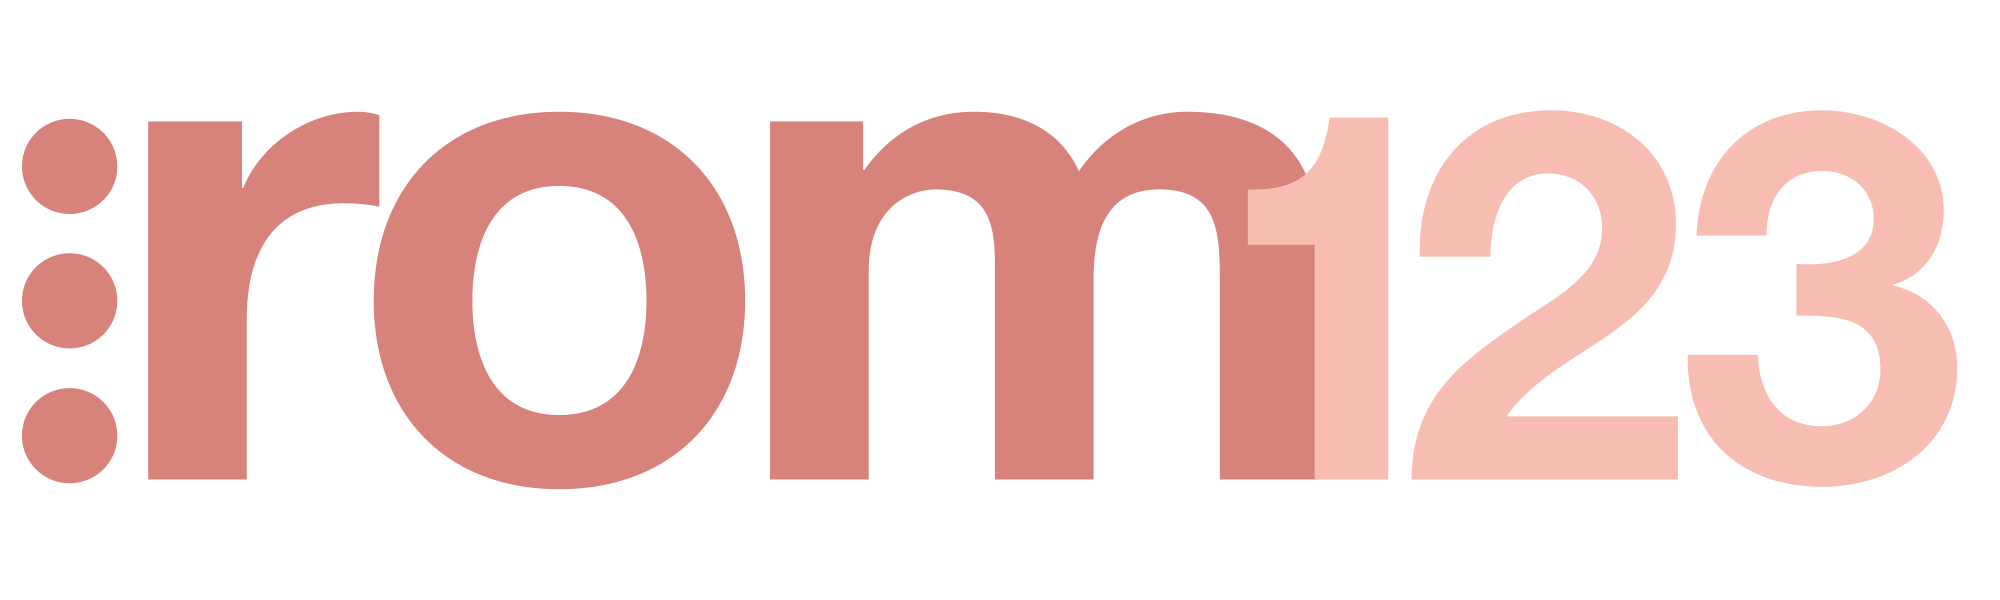 Magasin logo